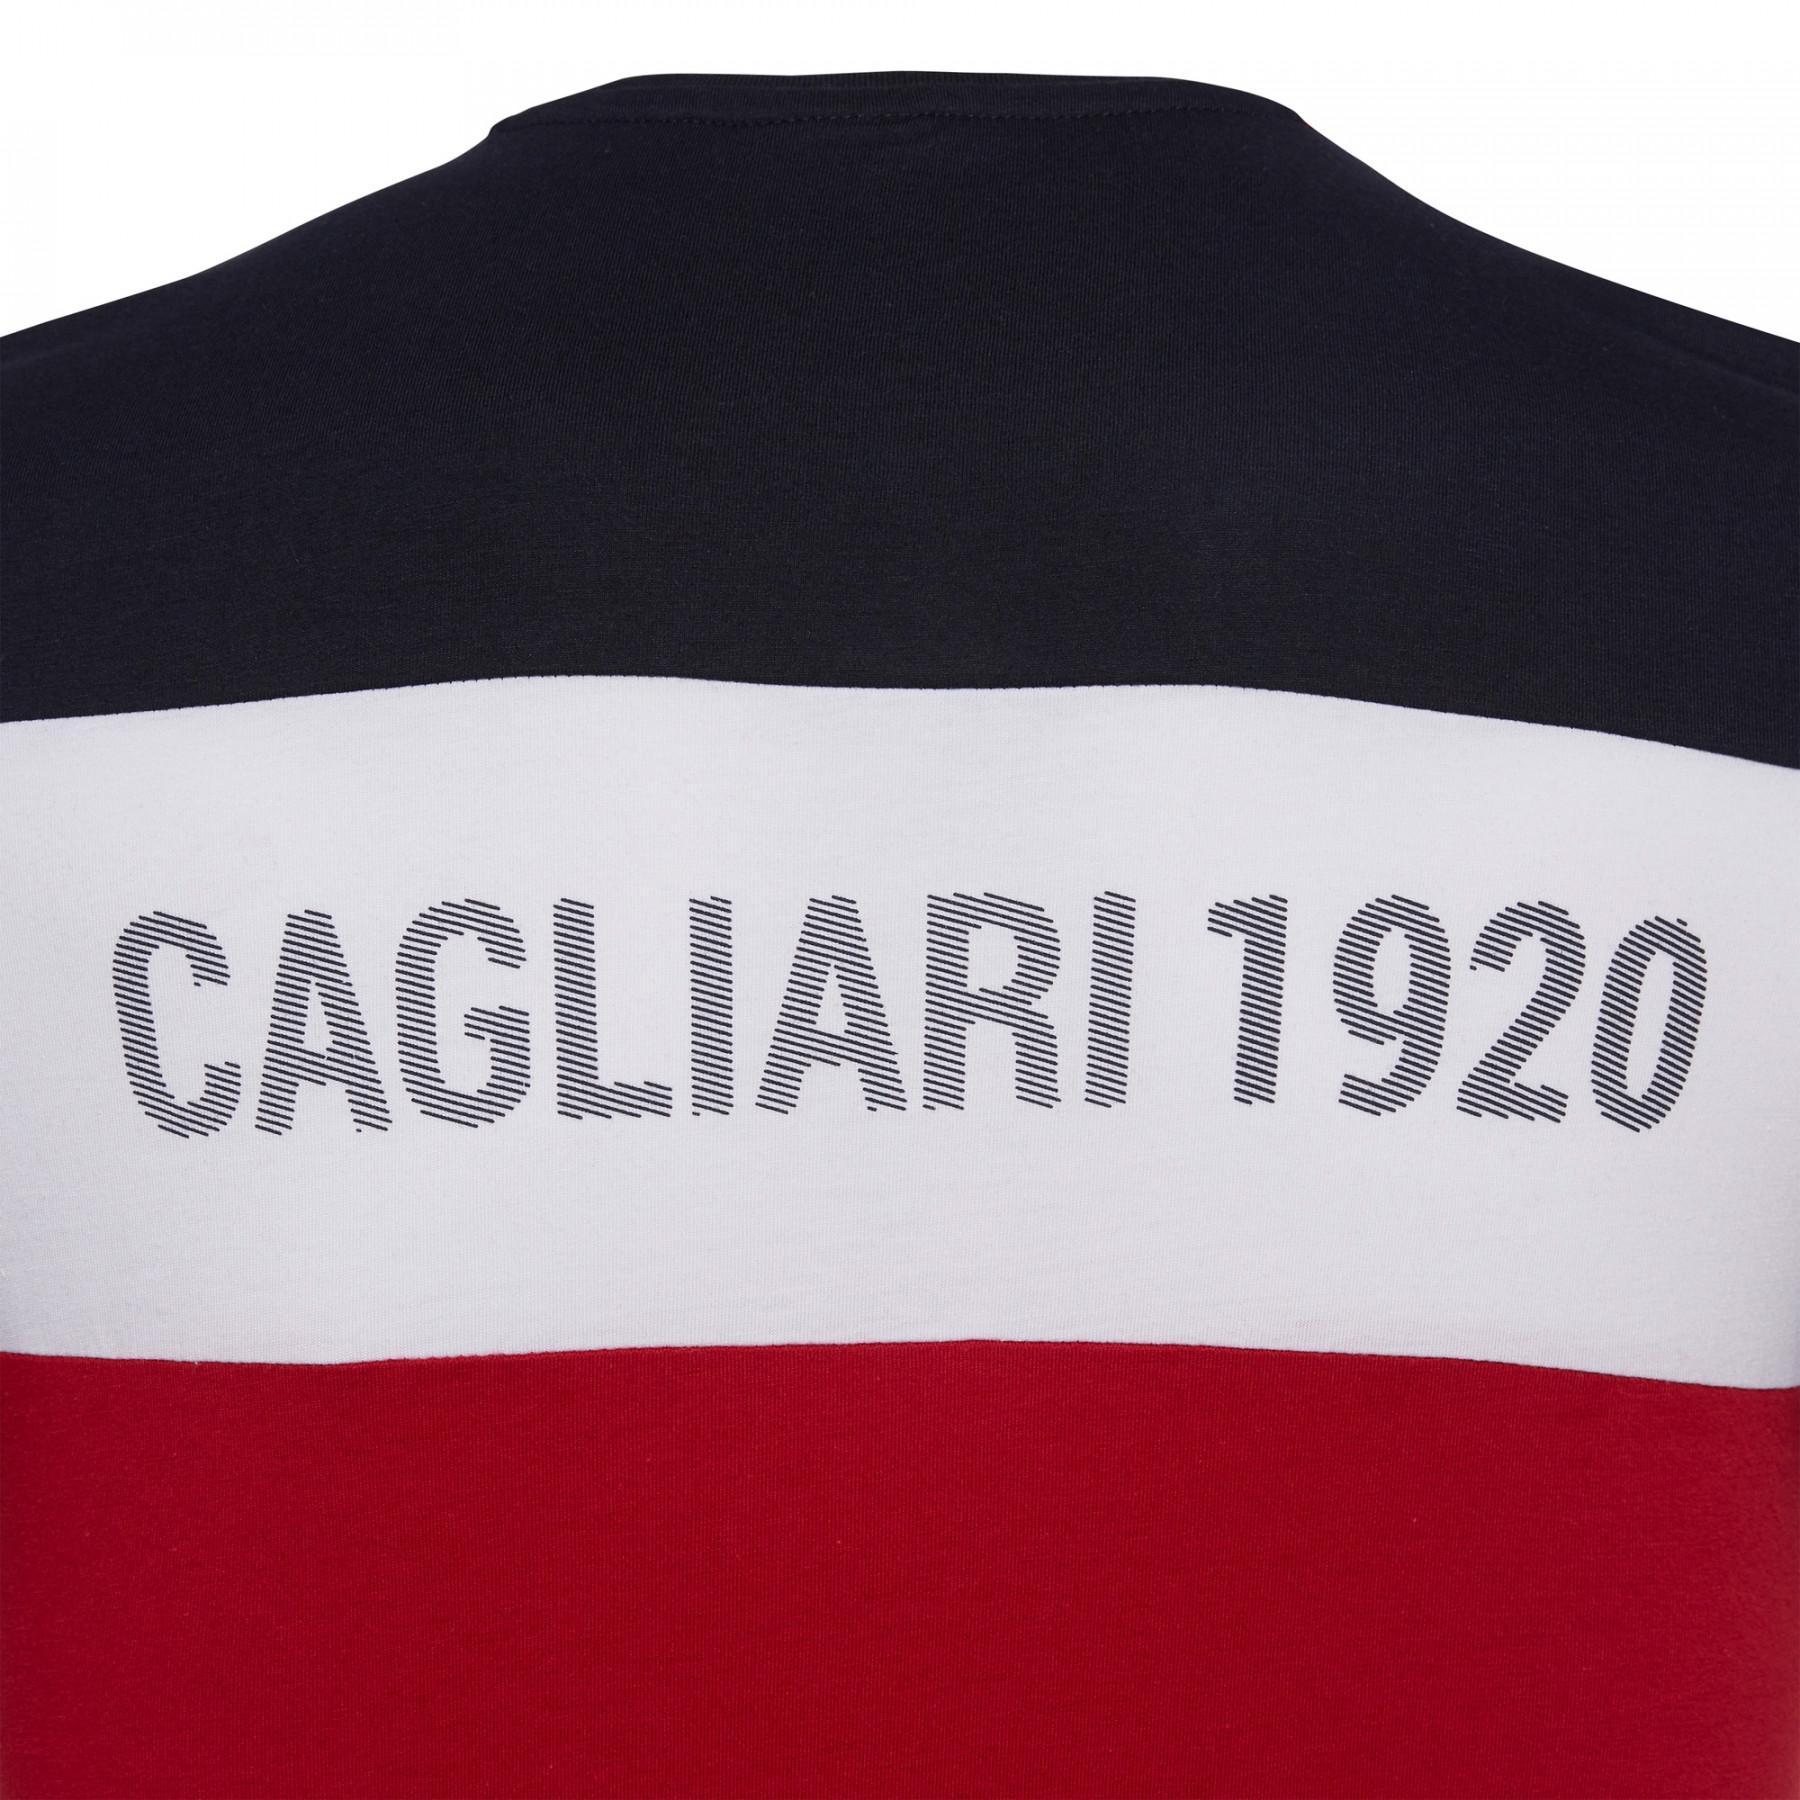 T-shirt Cagliari Calcio bh 3 logo